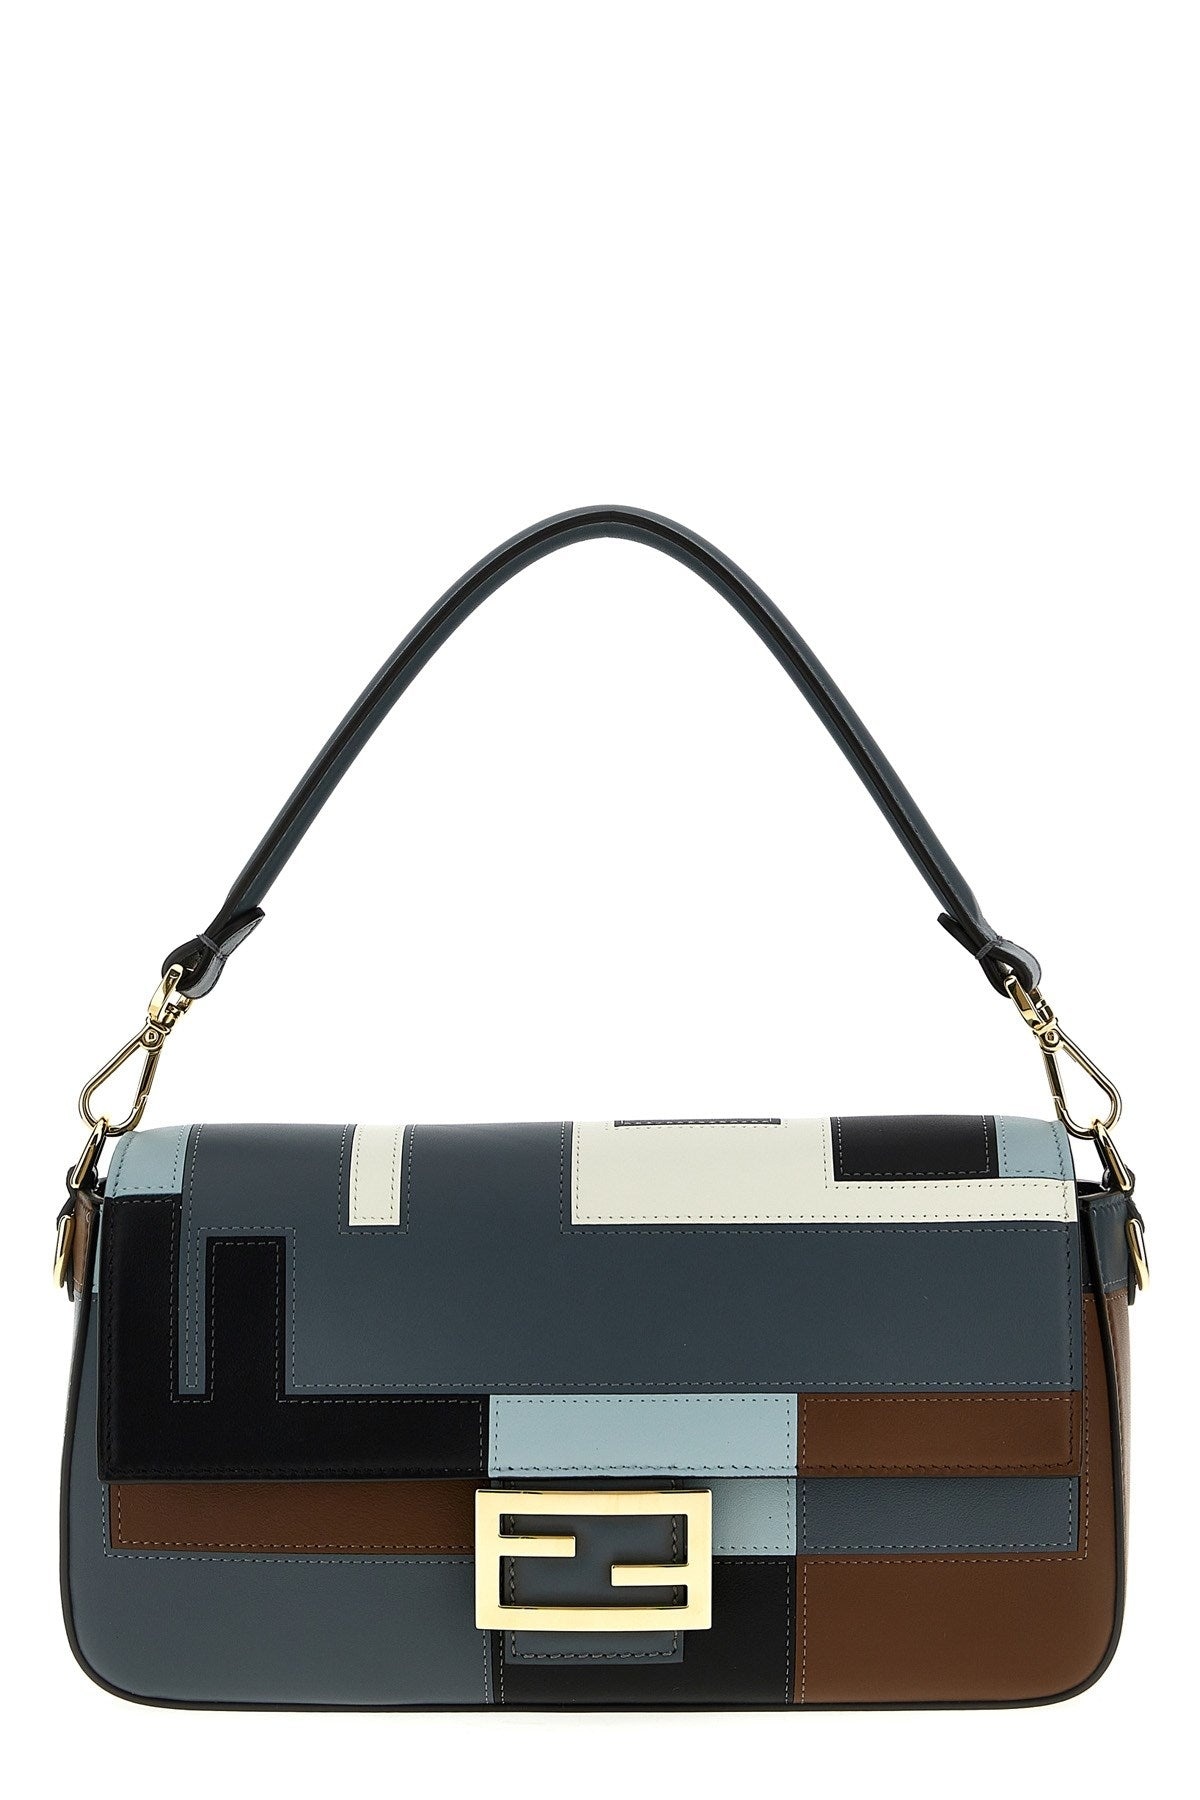 Fendi Women 'Baguette' Midi Handbag - 1